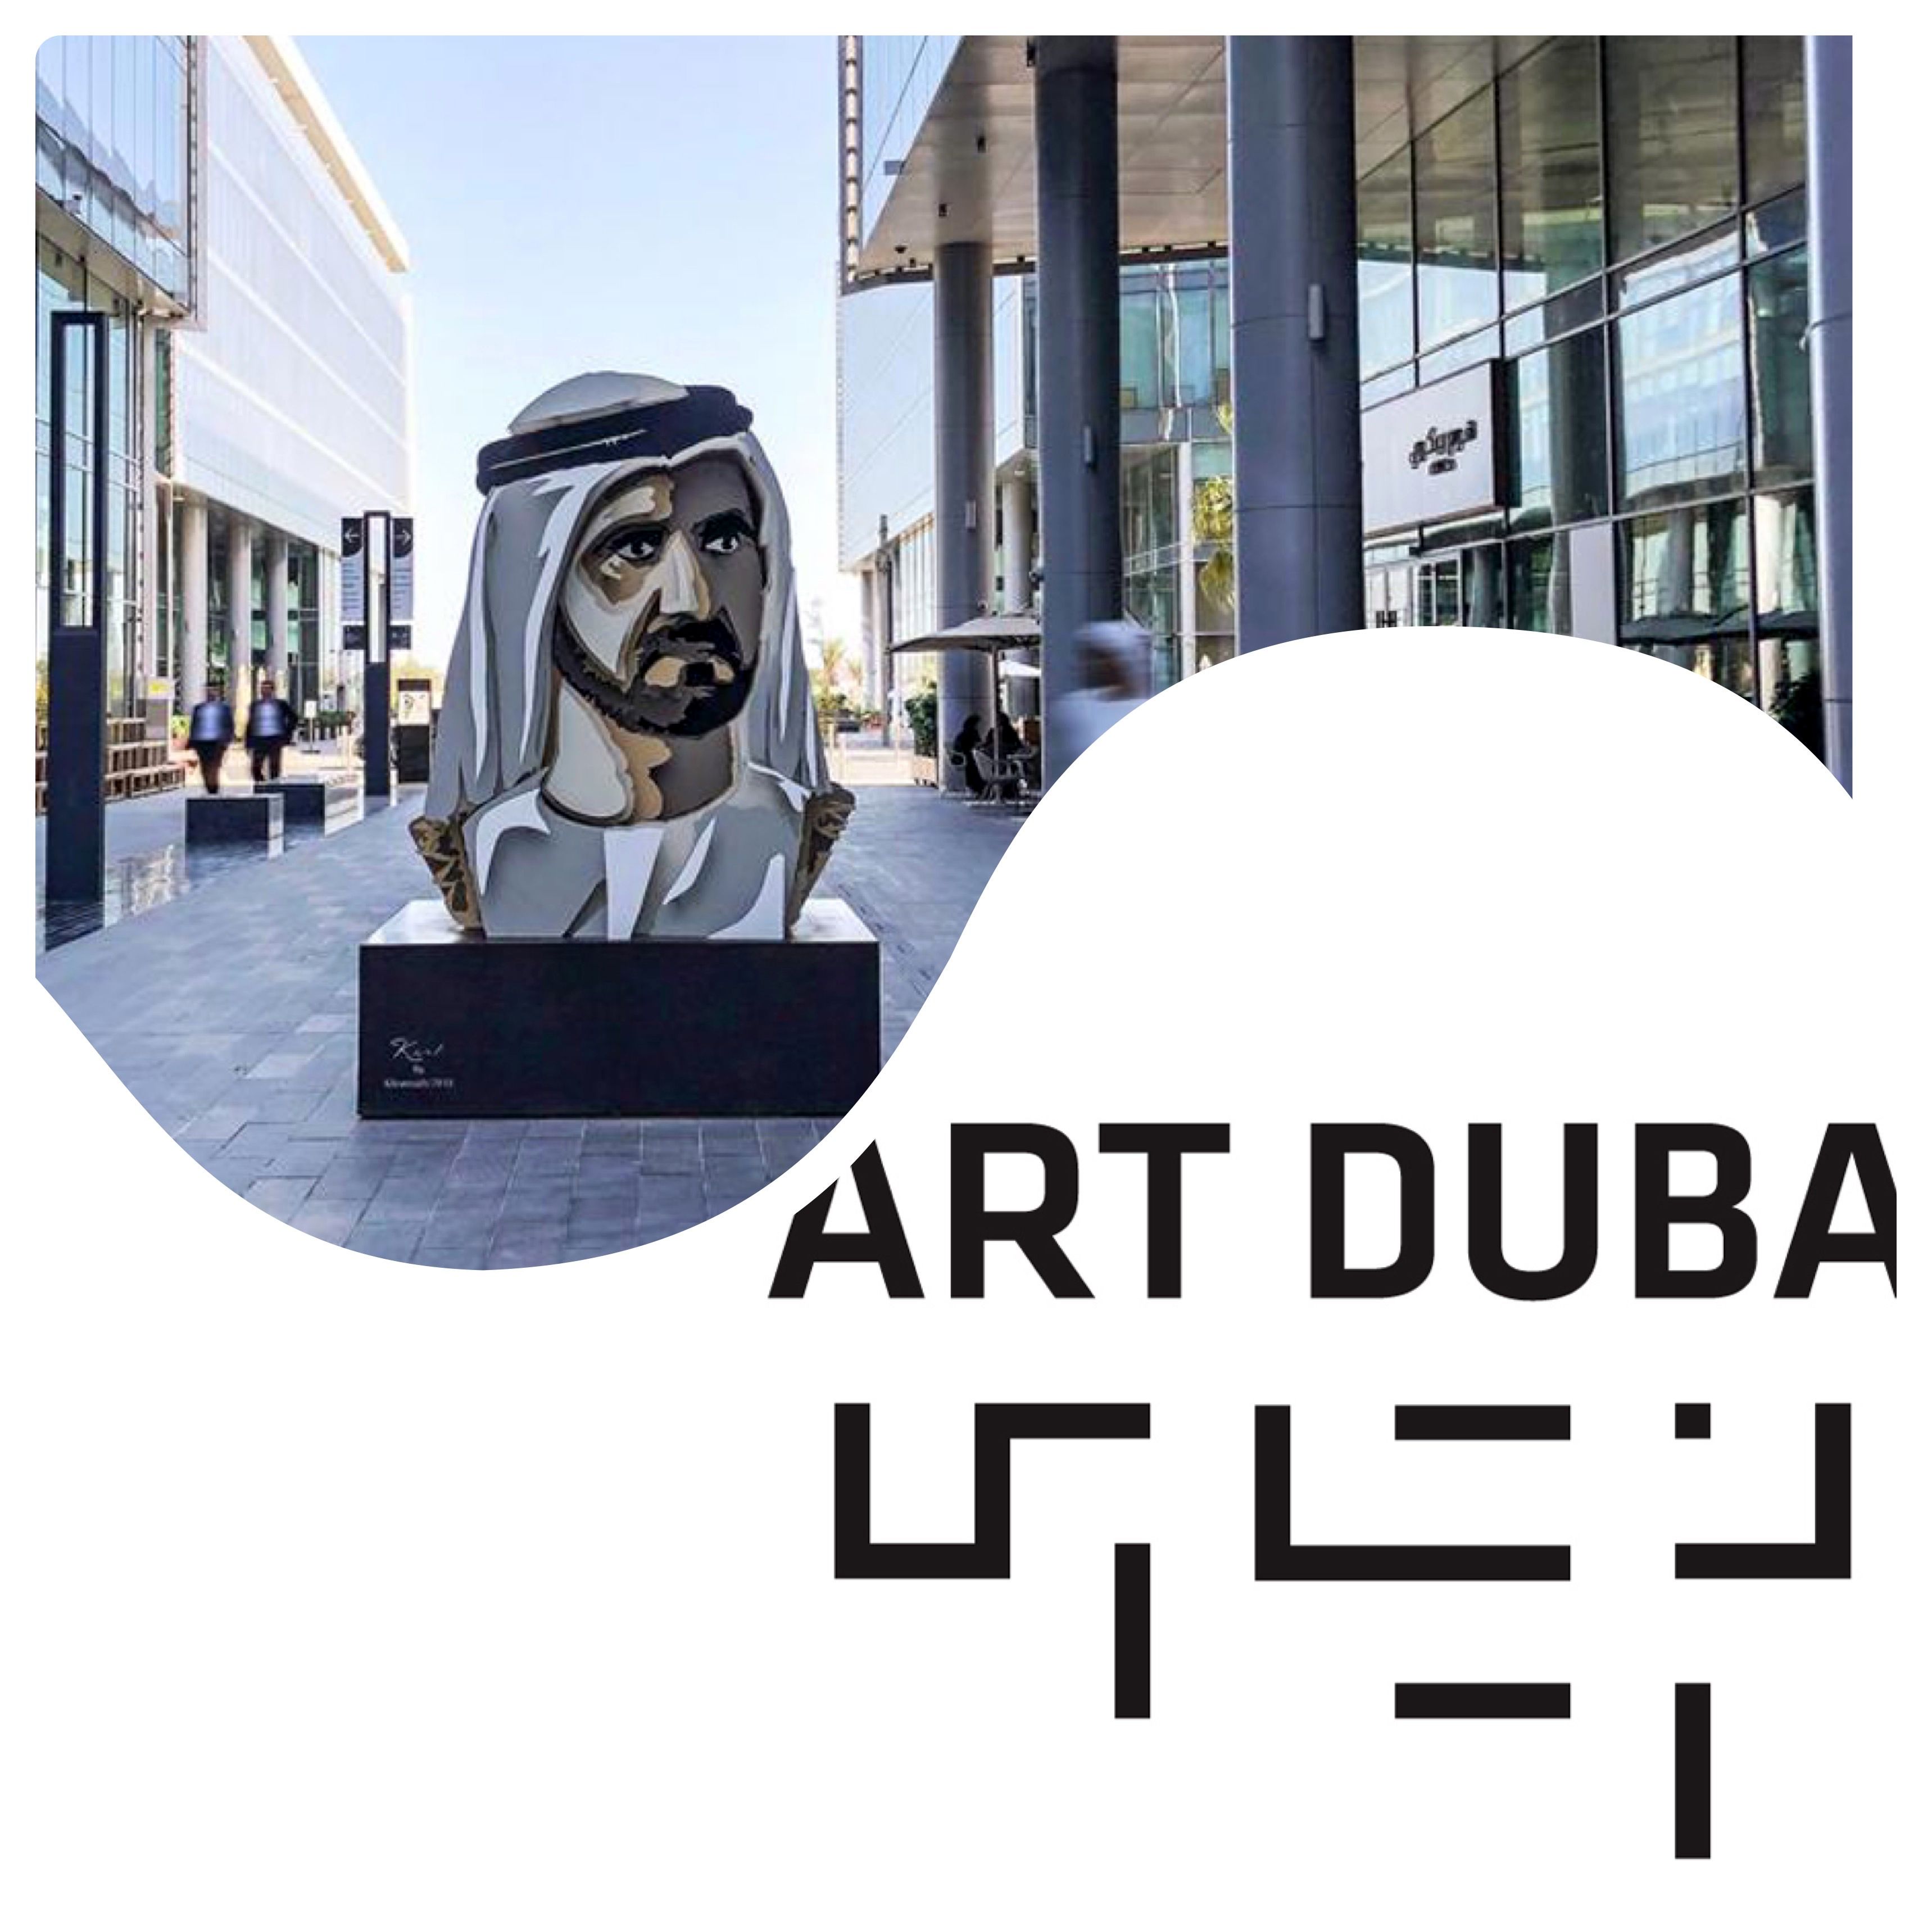 ArtDubai Held under the patronage of His Highness Sheikh Mohammed bin Rashid Al Maktoum has announced details of the programme 16th edition